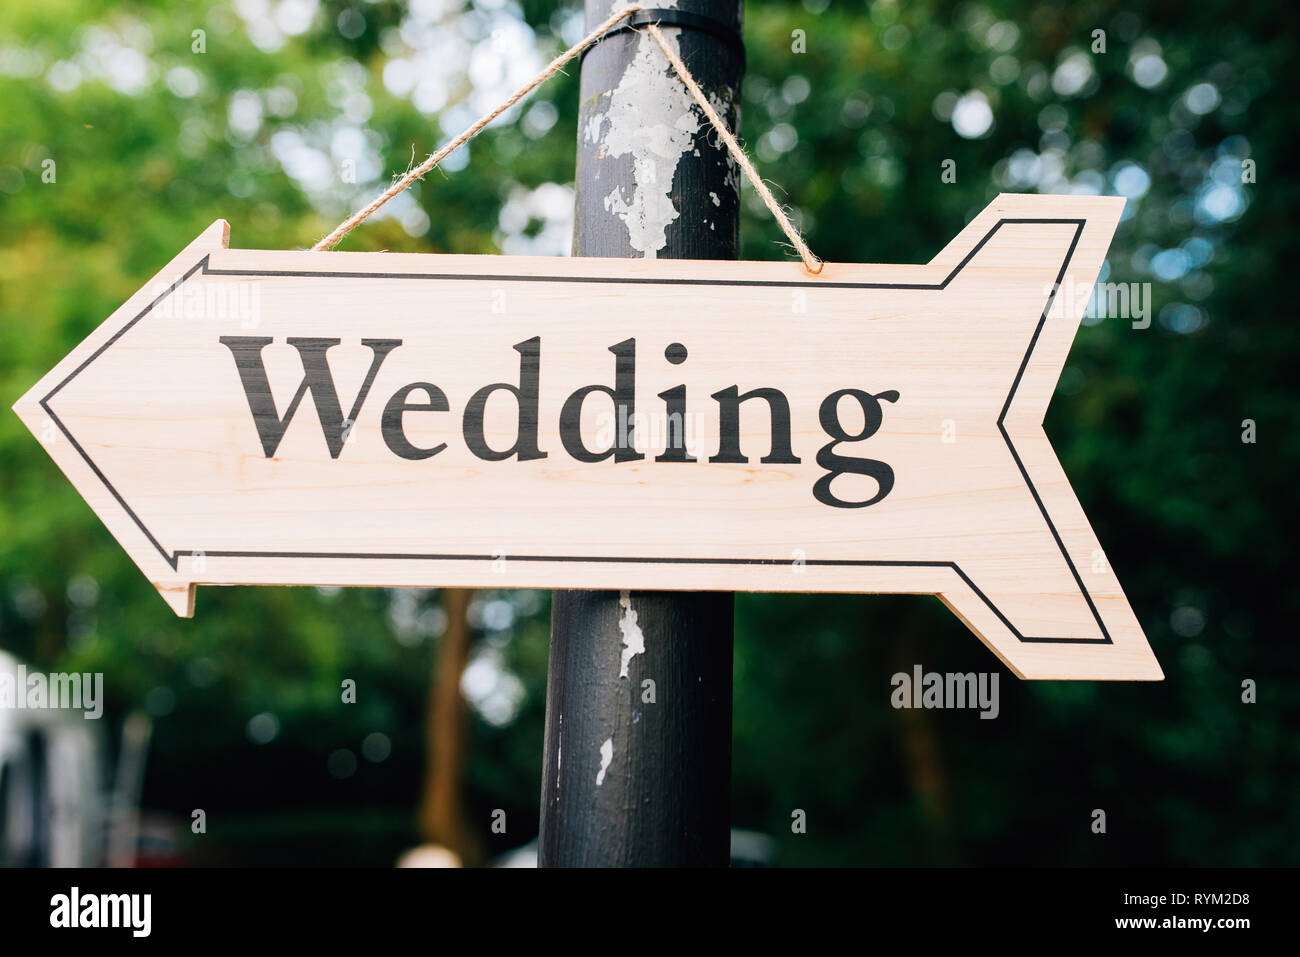 Weddings allowed UK England coronavirus 2020. hanging wooden sign with the word wedding written on it Stock Photo